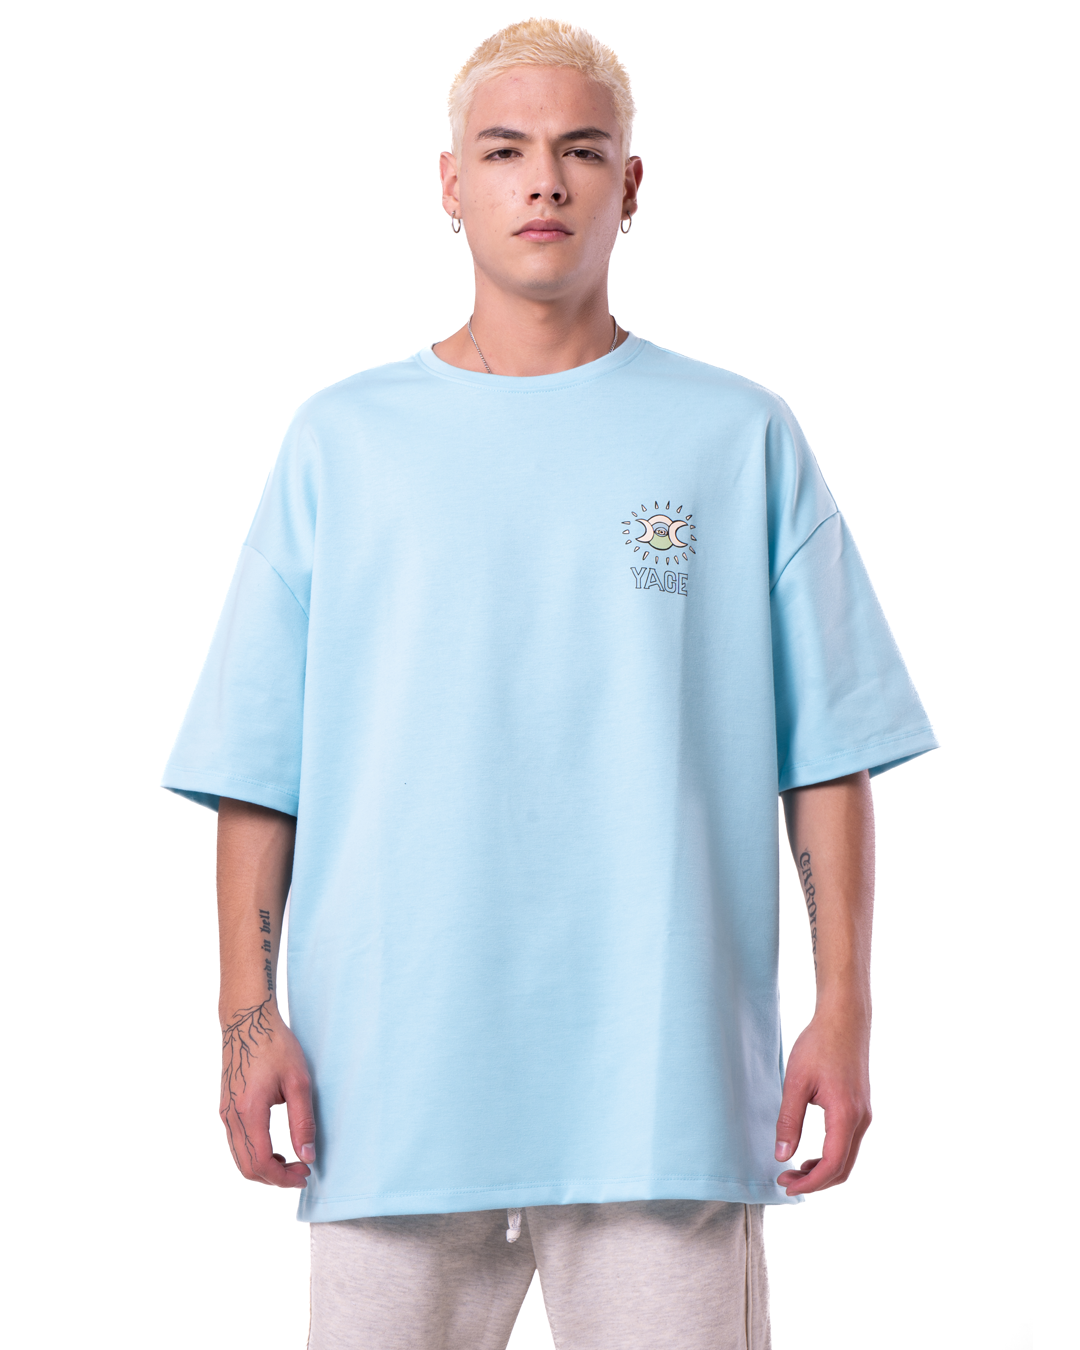 – US T-shirt Oversize Moda Yage Spiritual